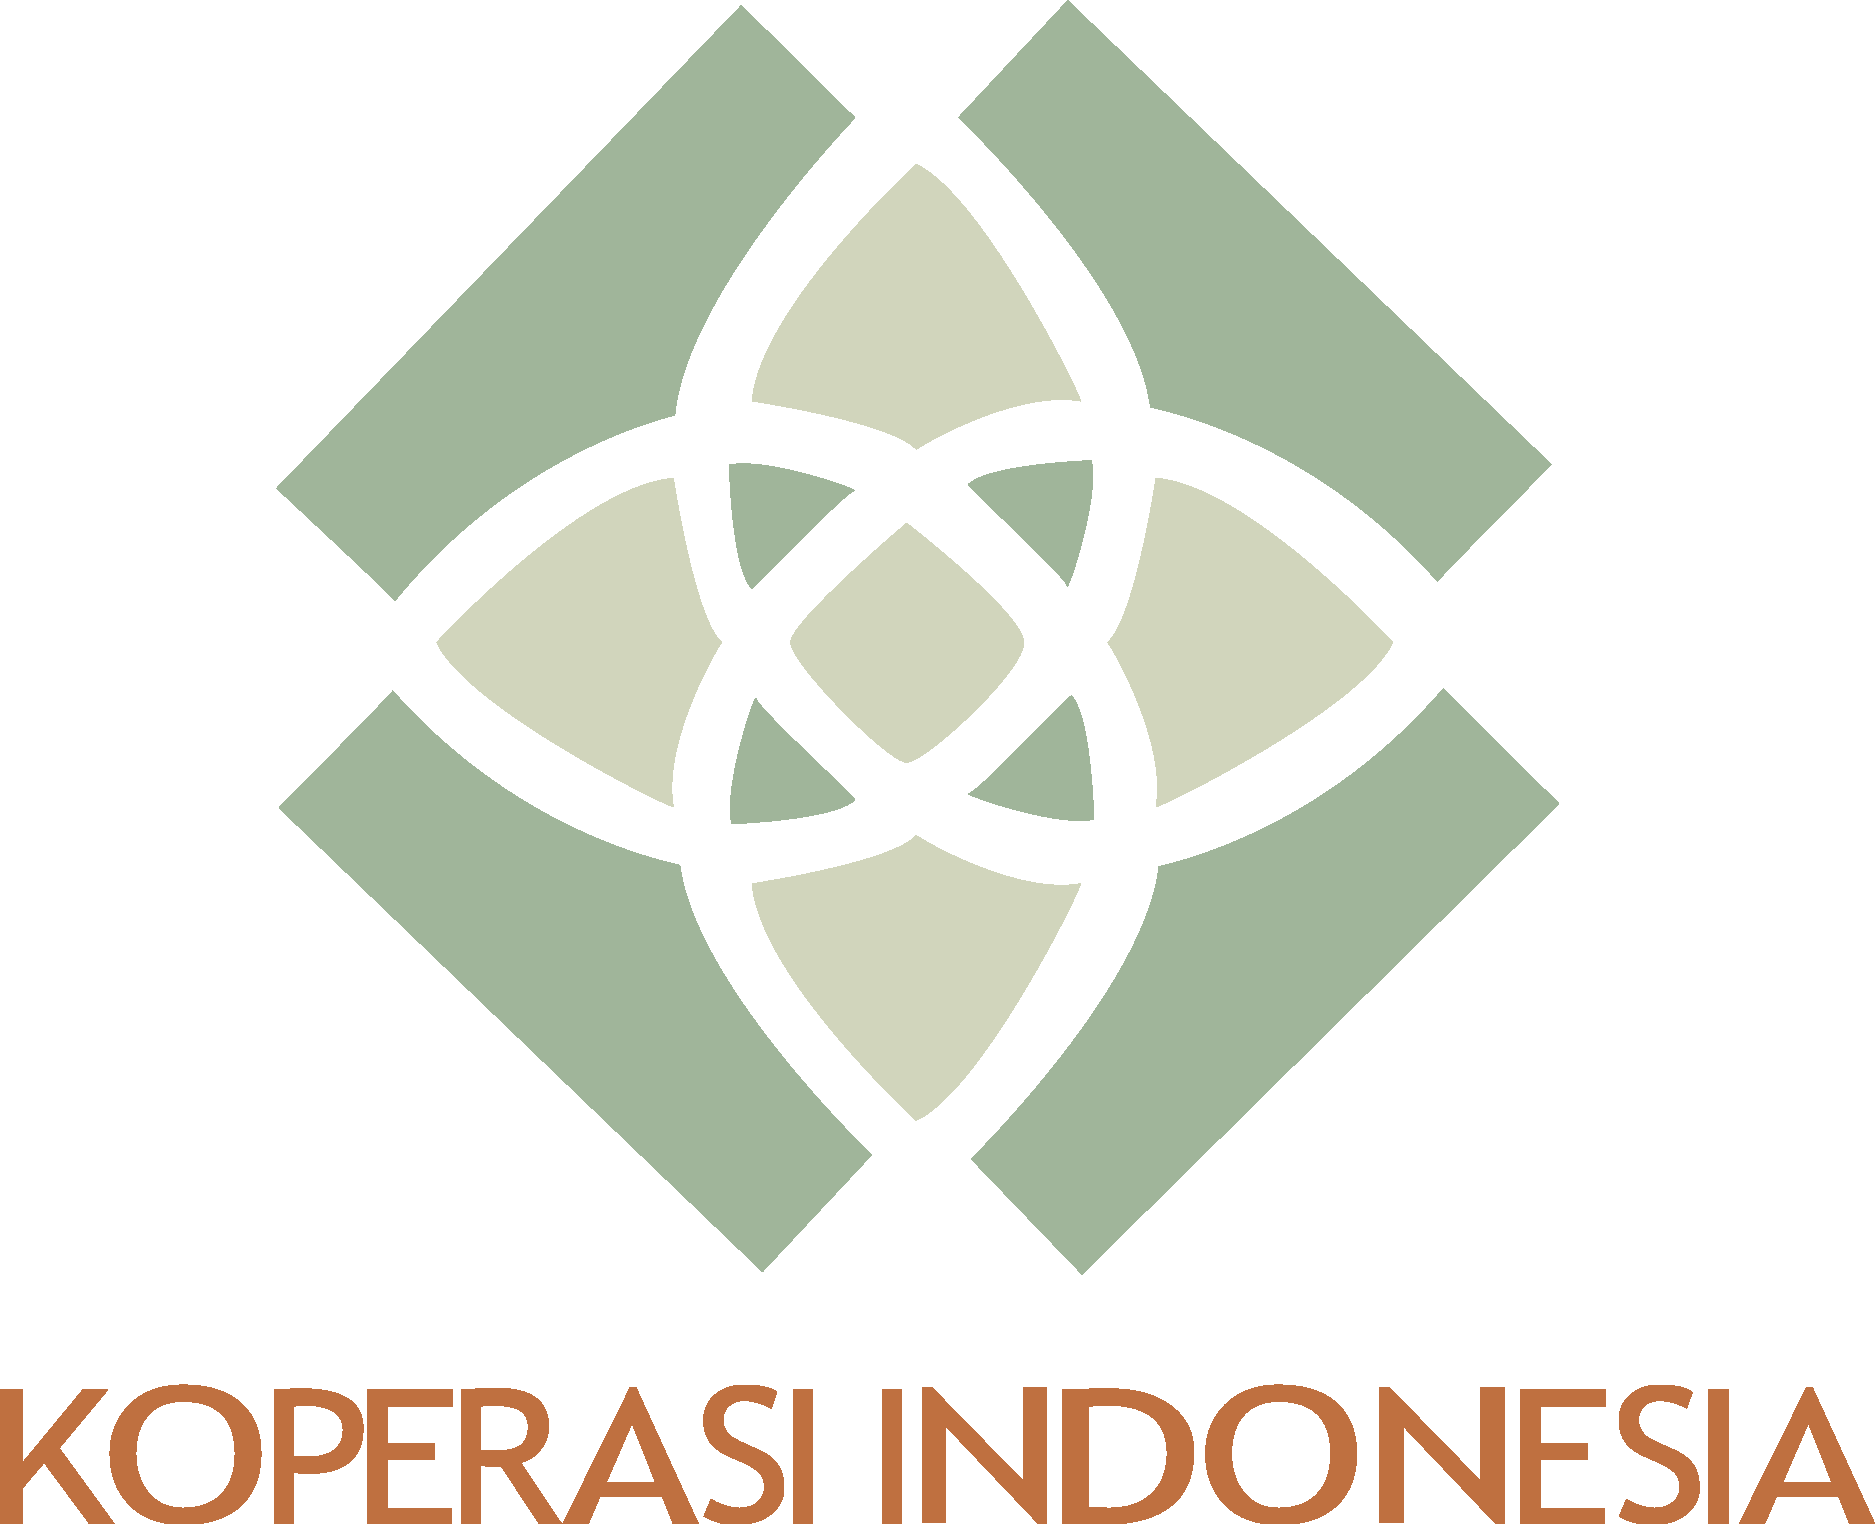 Koperasi Indonesia Logo Vector